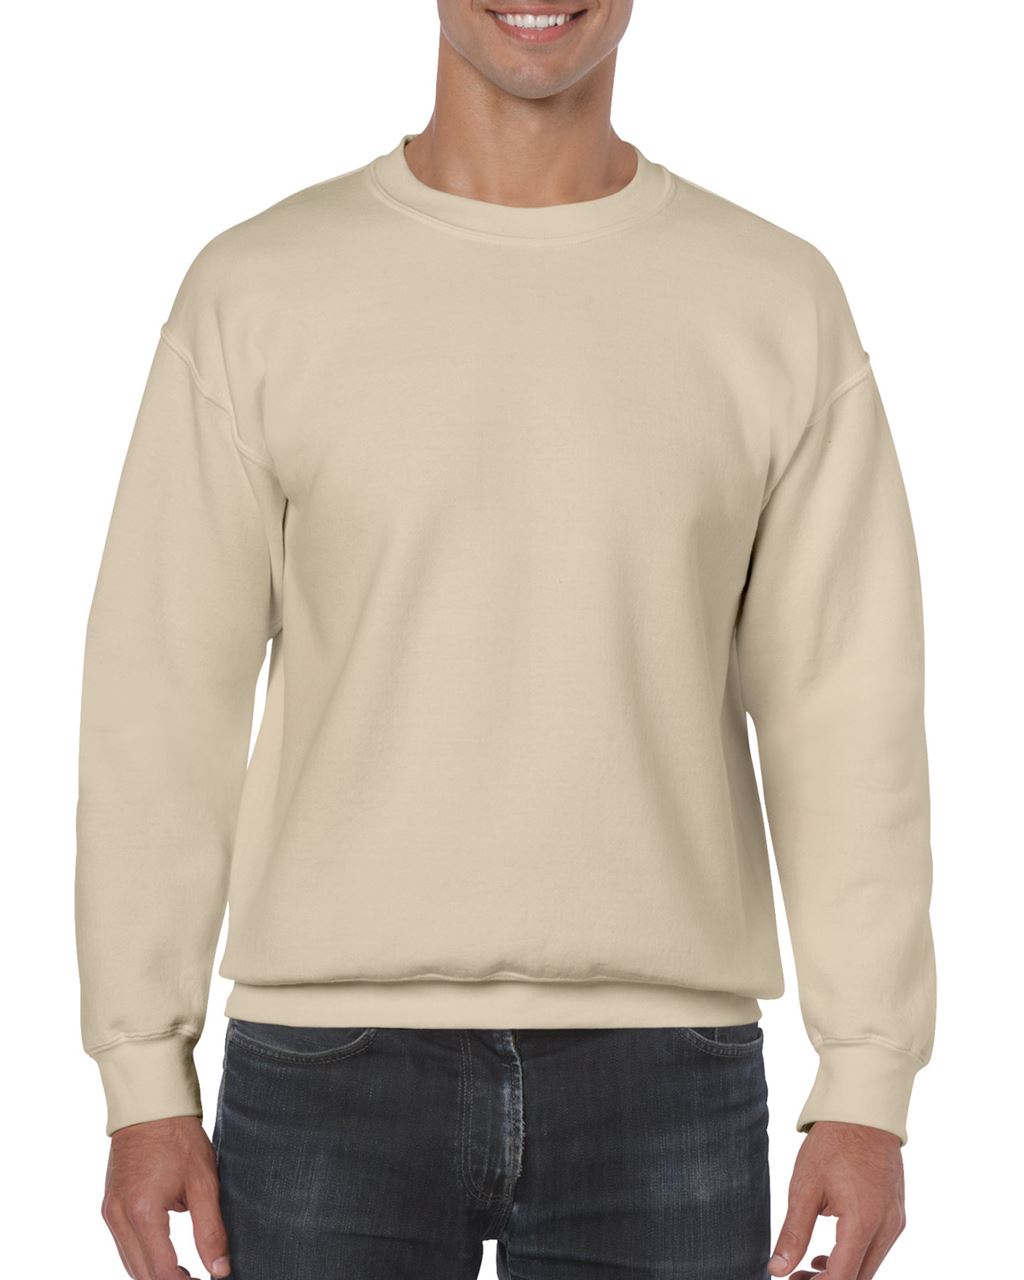 Adult Crewneck Sweatshirt - GREY - XL